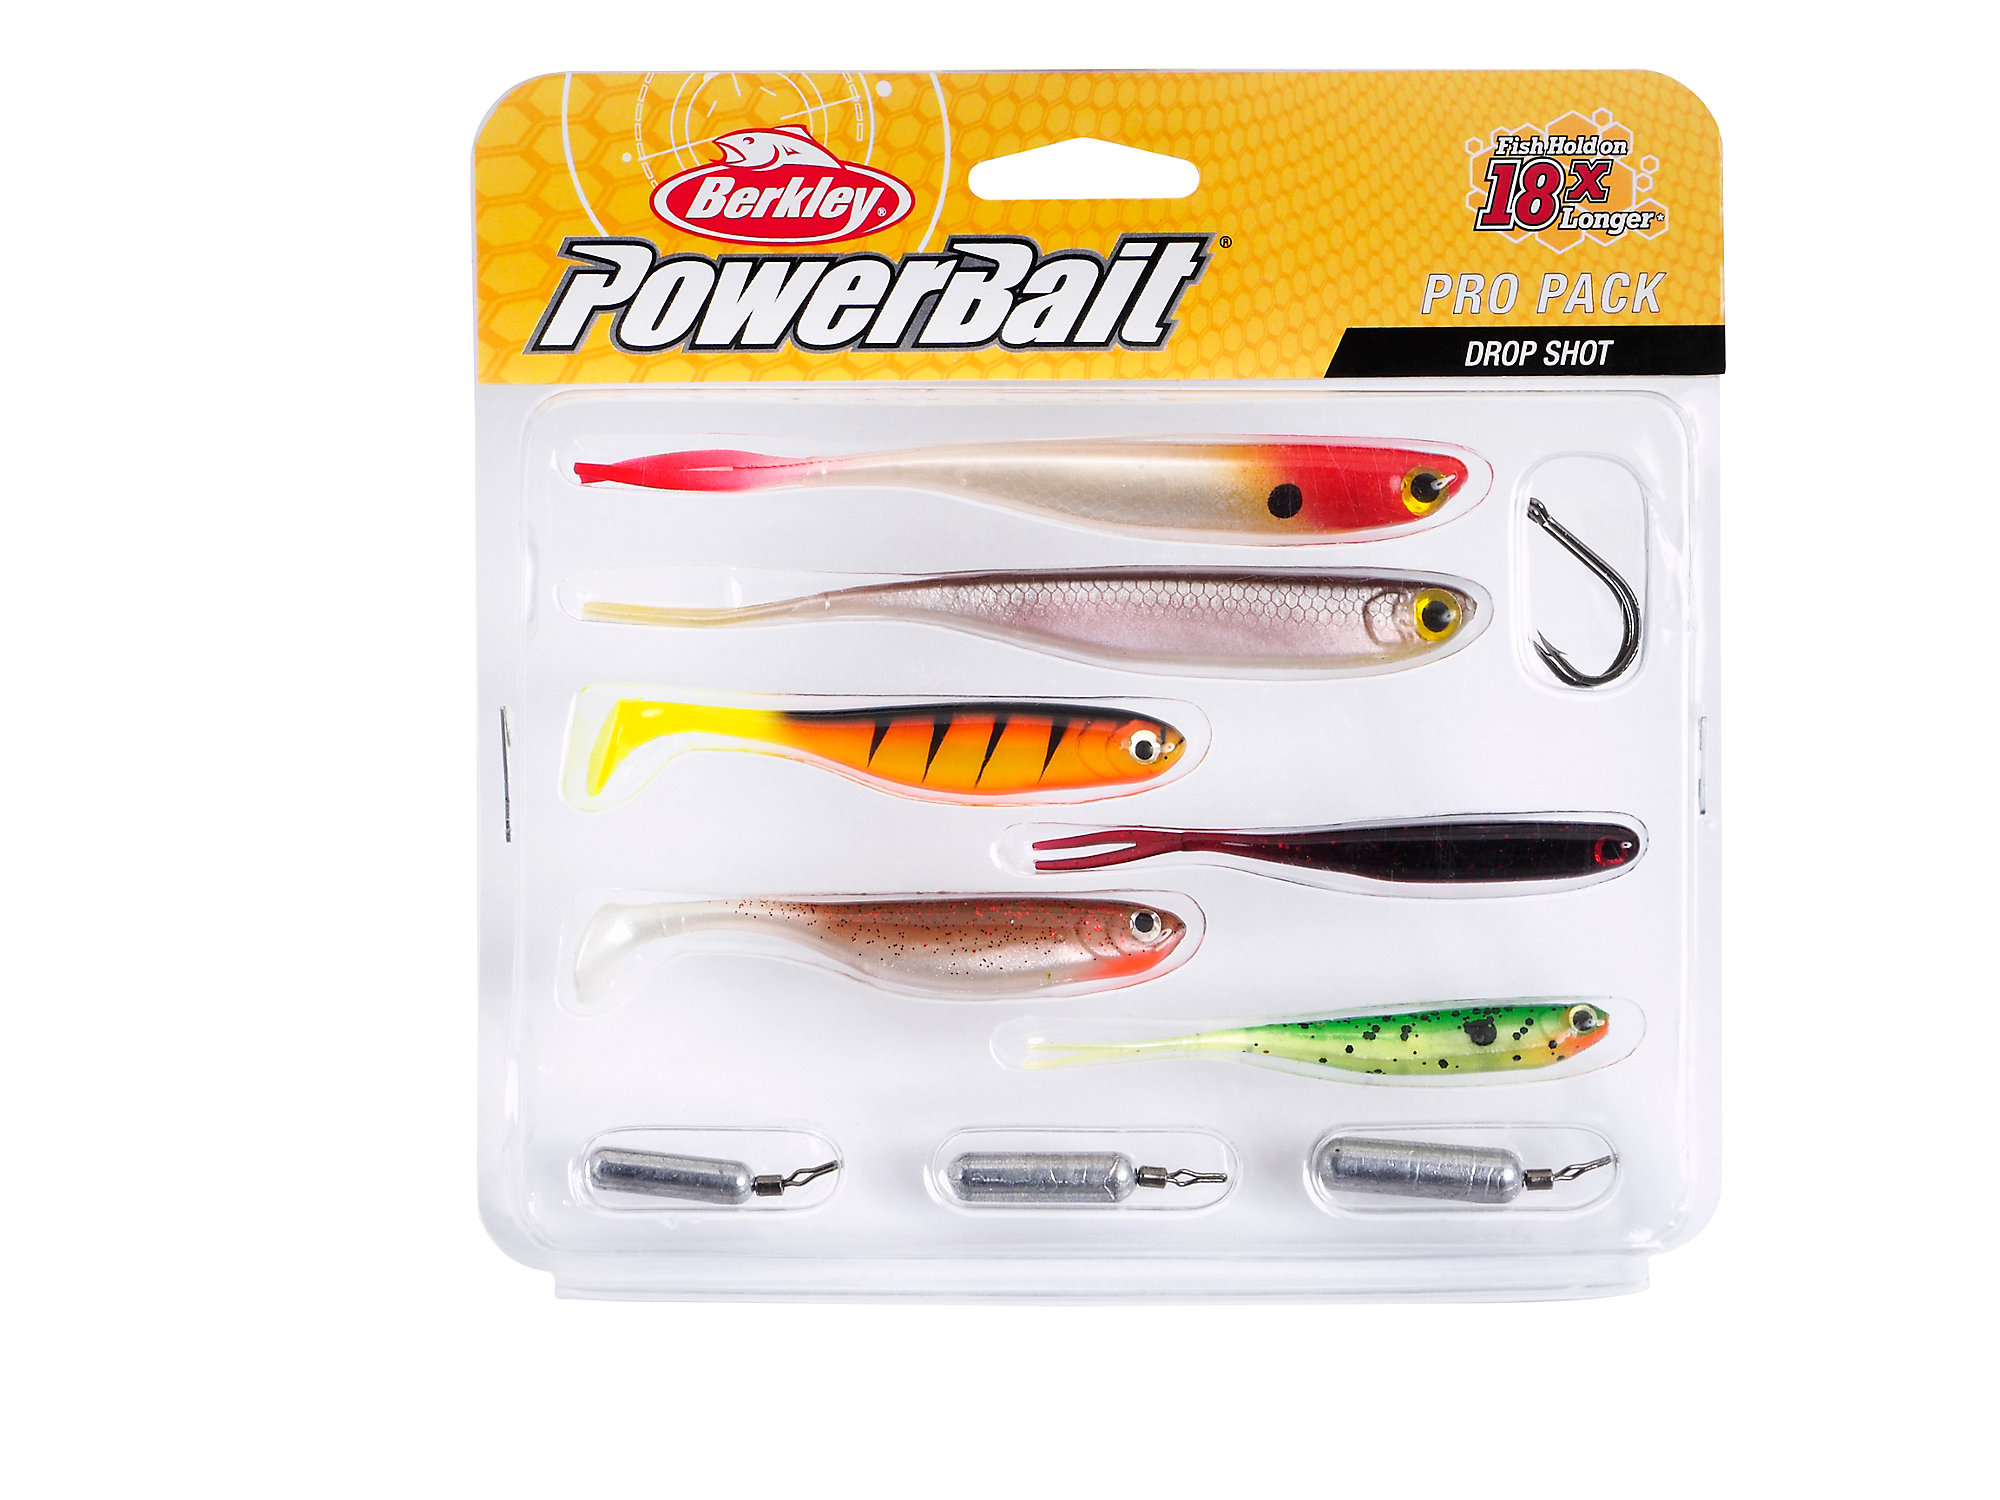 Berkley Powerbait Drop Shot Fishing Kit